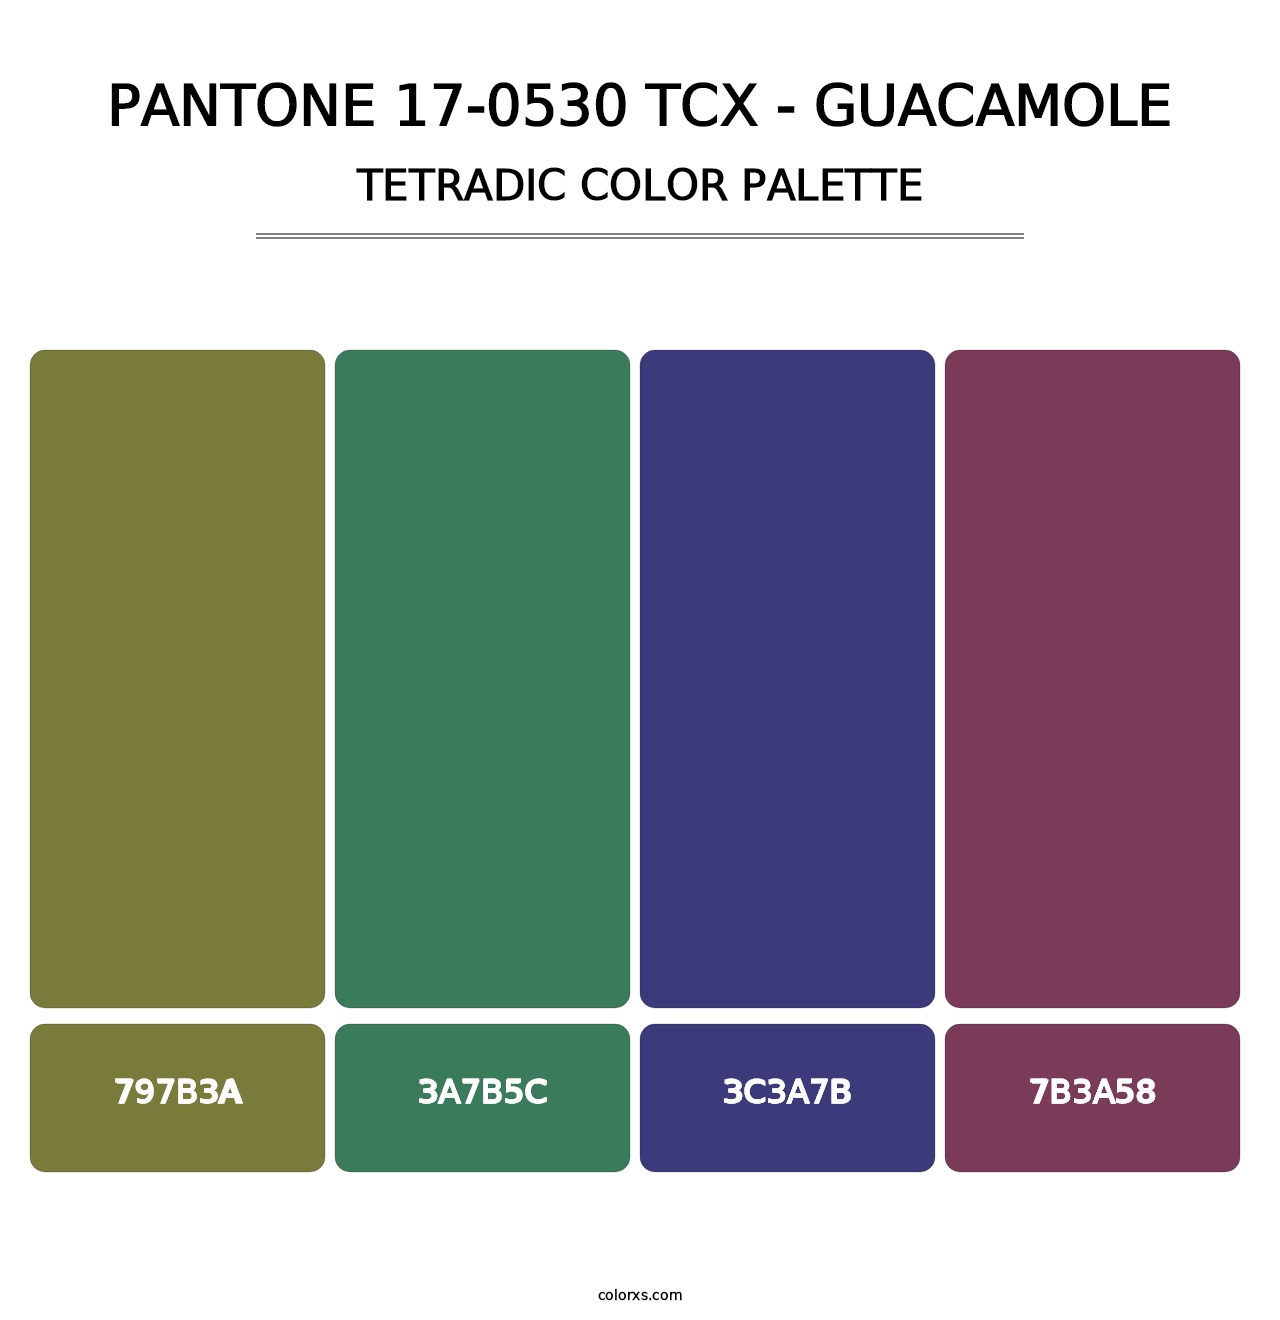 PANTONE 17-0530 TCX - Guacamole - Tetradic Color Palette